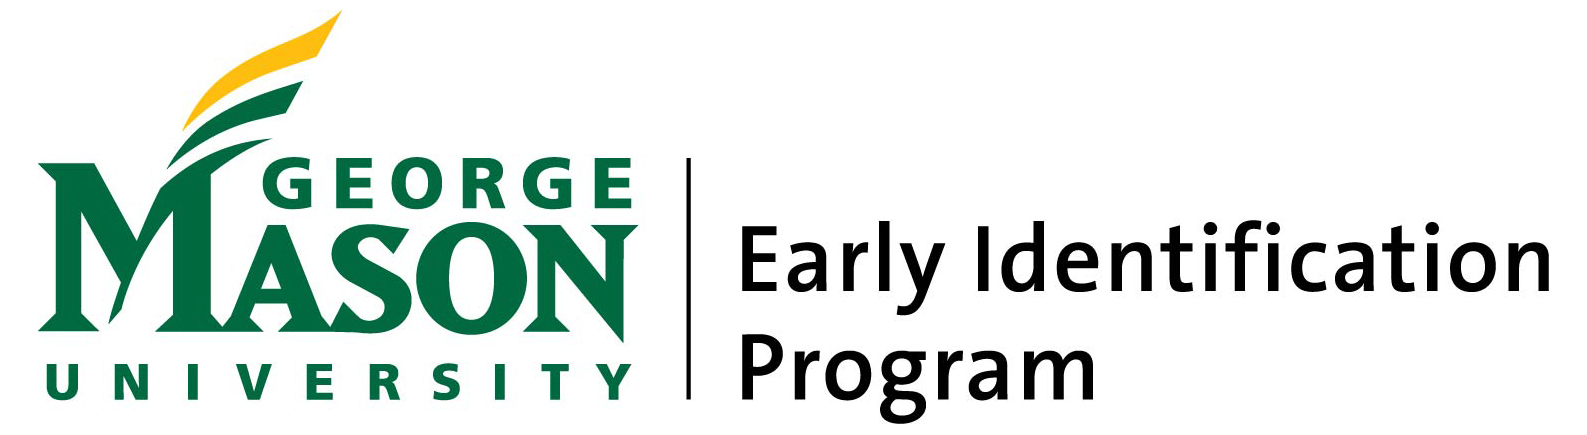 Early Identification Program logo